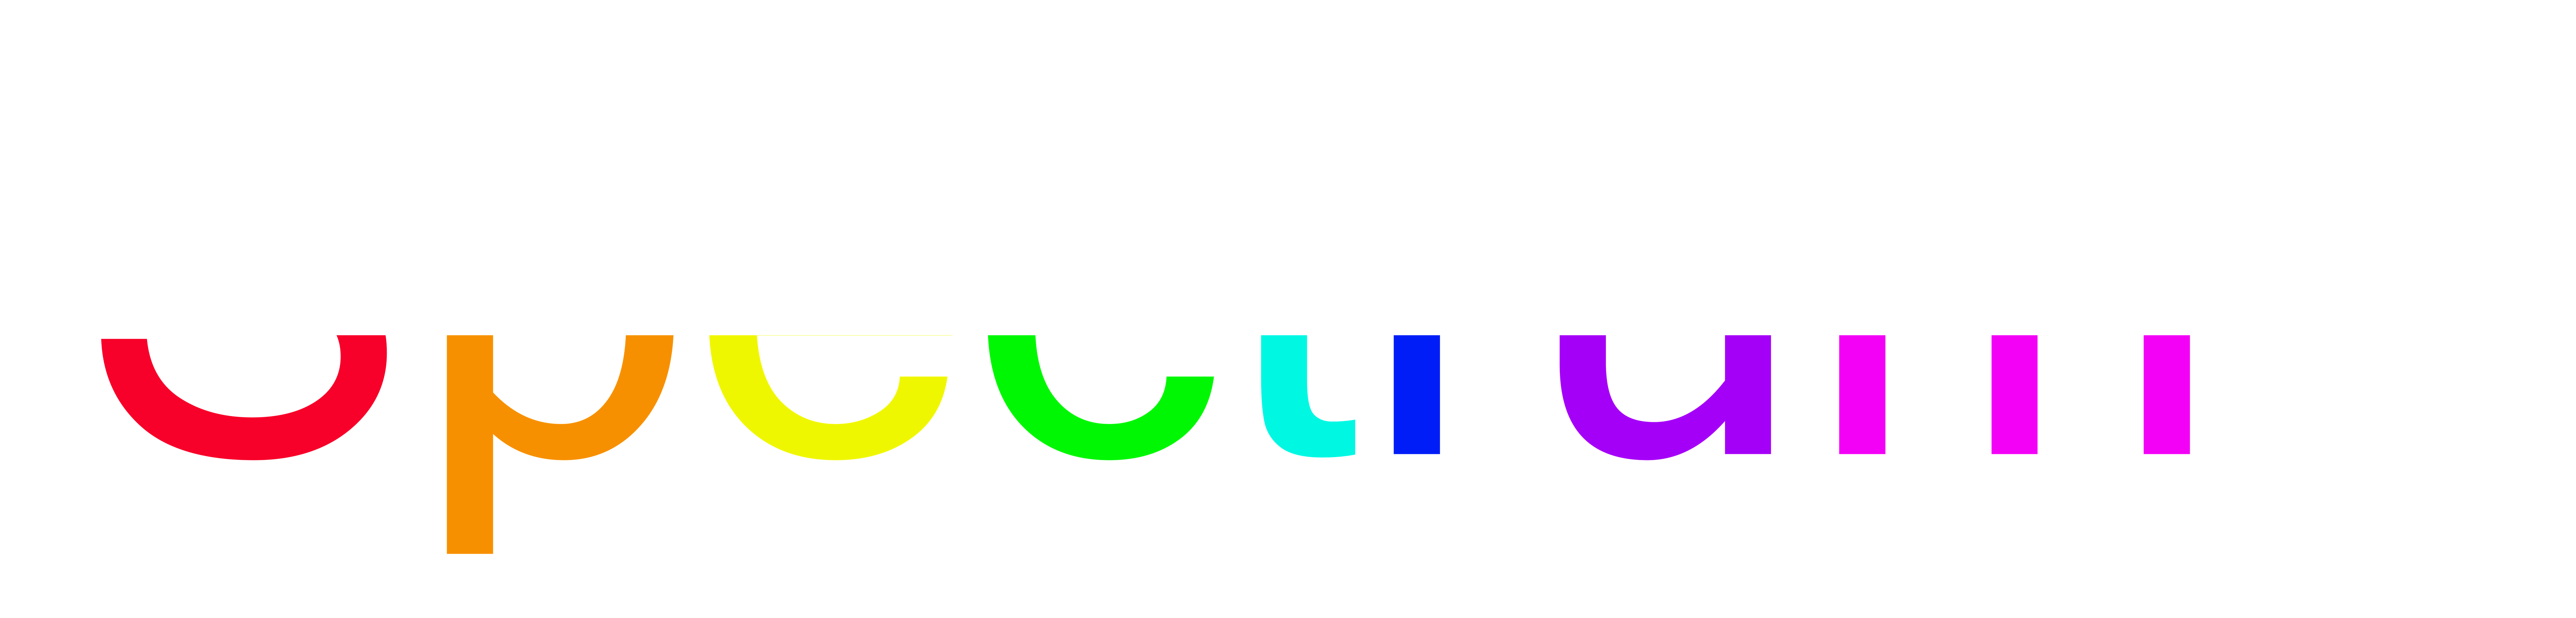 Spectrum Web Development Logo